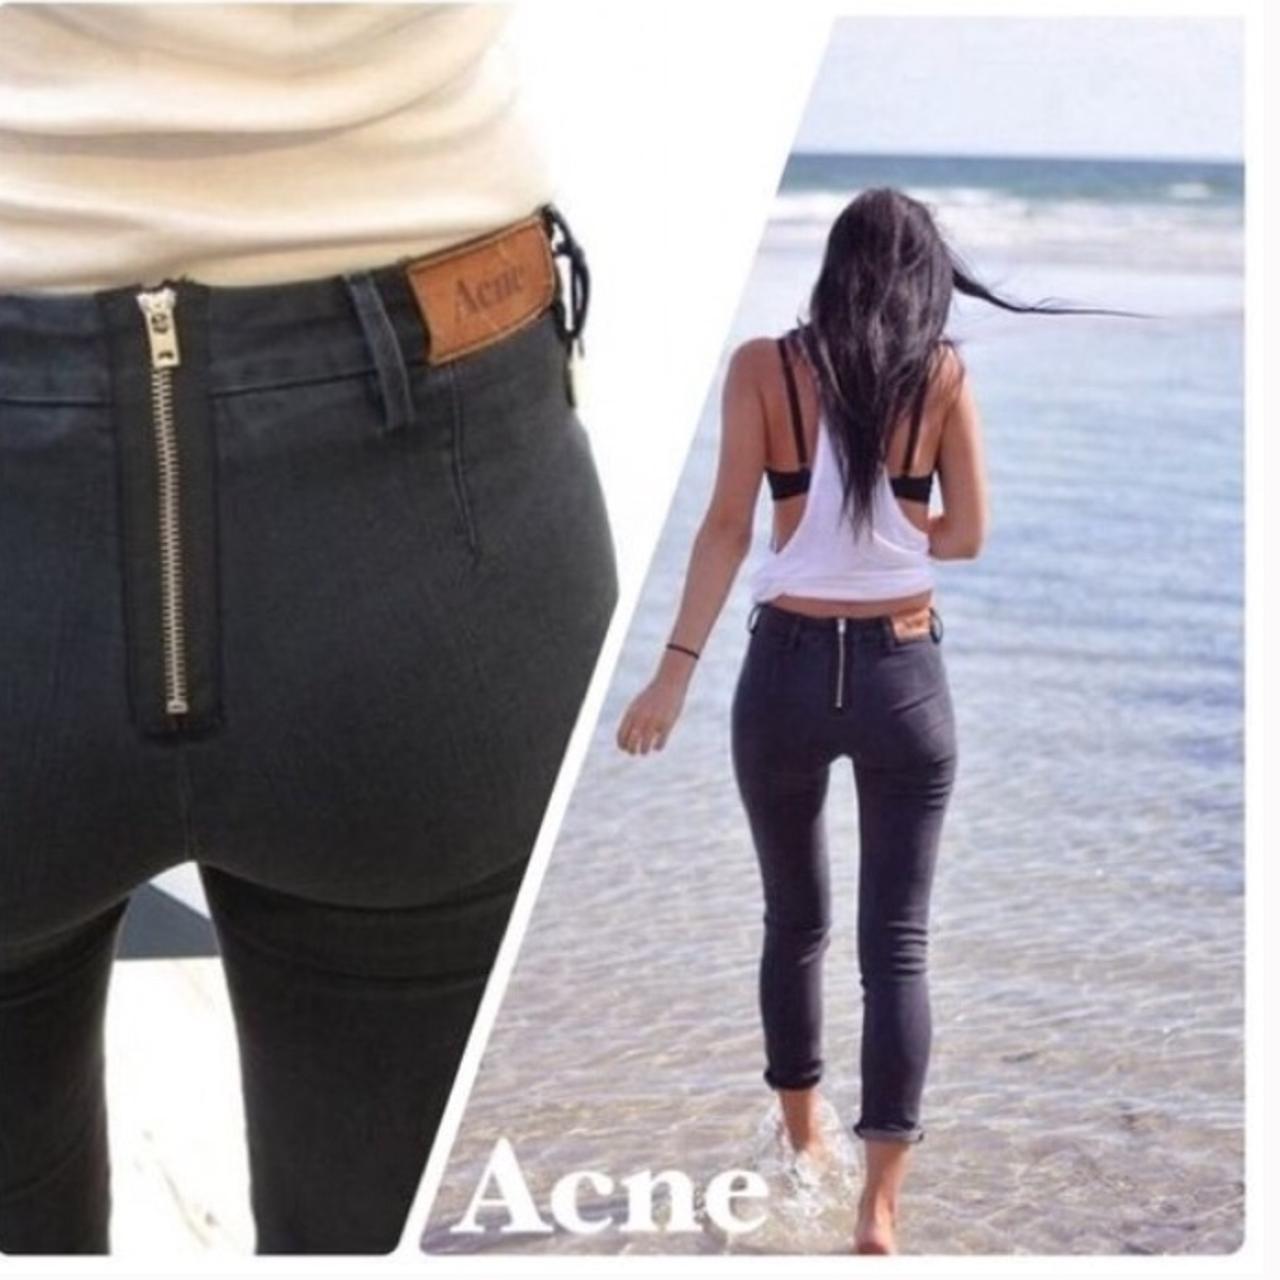 ACNE STUDIOS 'Flex Slim Jeans' back zip and... - Depop